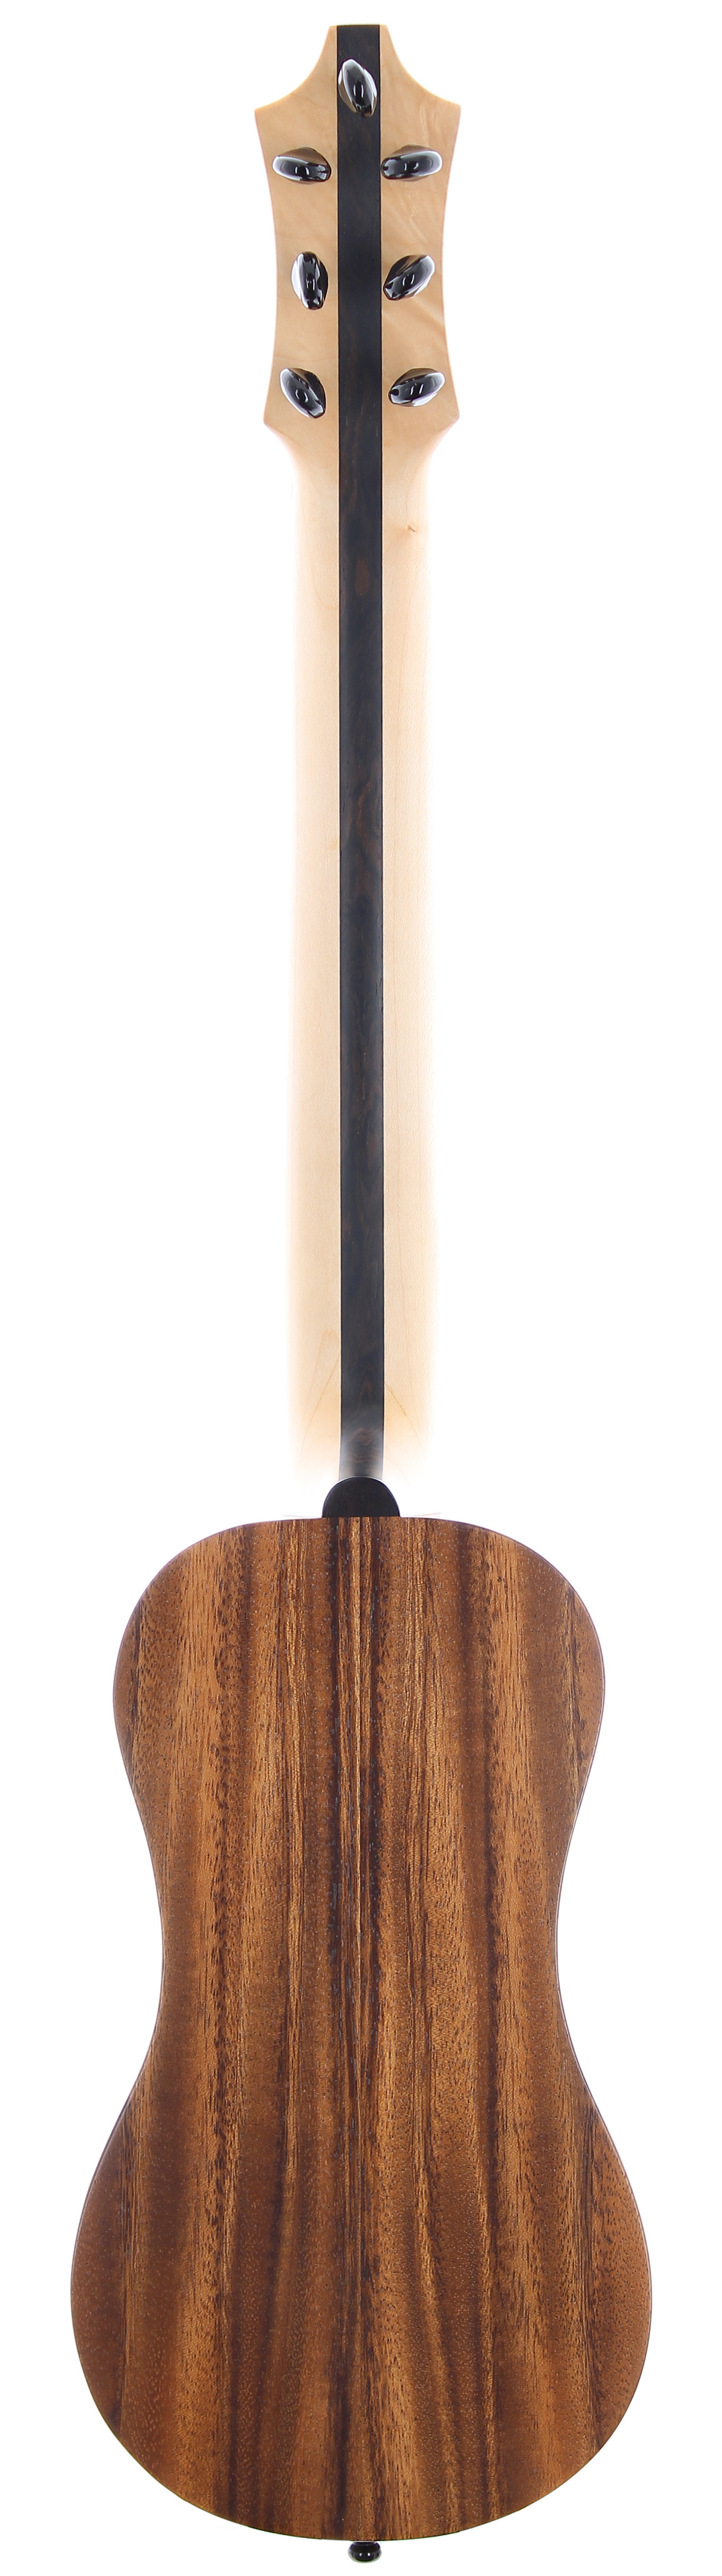 Zachary Taylor Chitarrino Renaissance guitar; Back and sides: acacia; Top: spruce; Fretboard: ebony; - Image 2 of 3